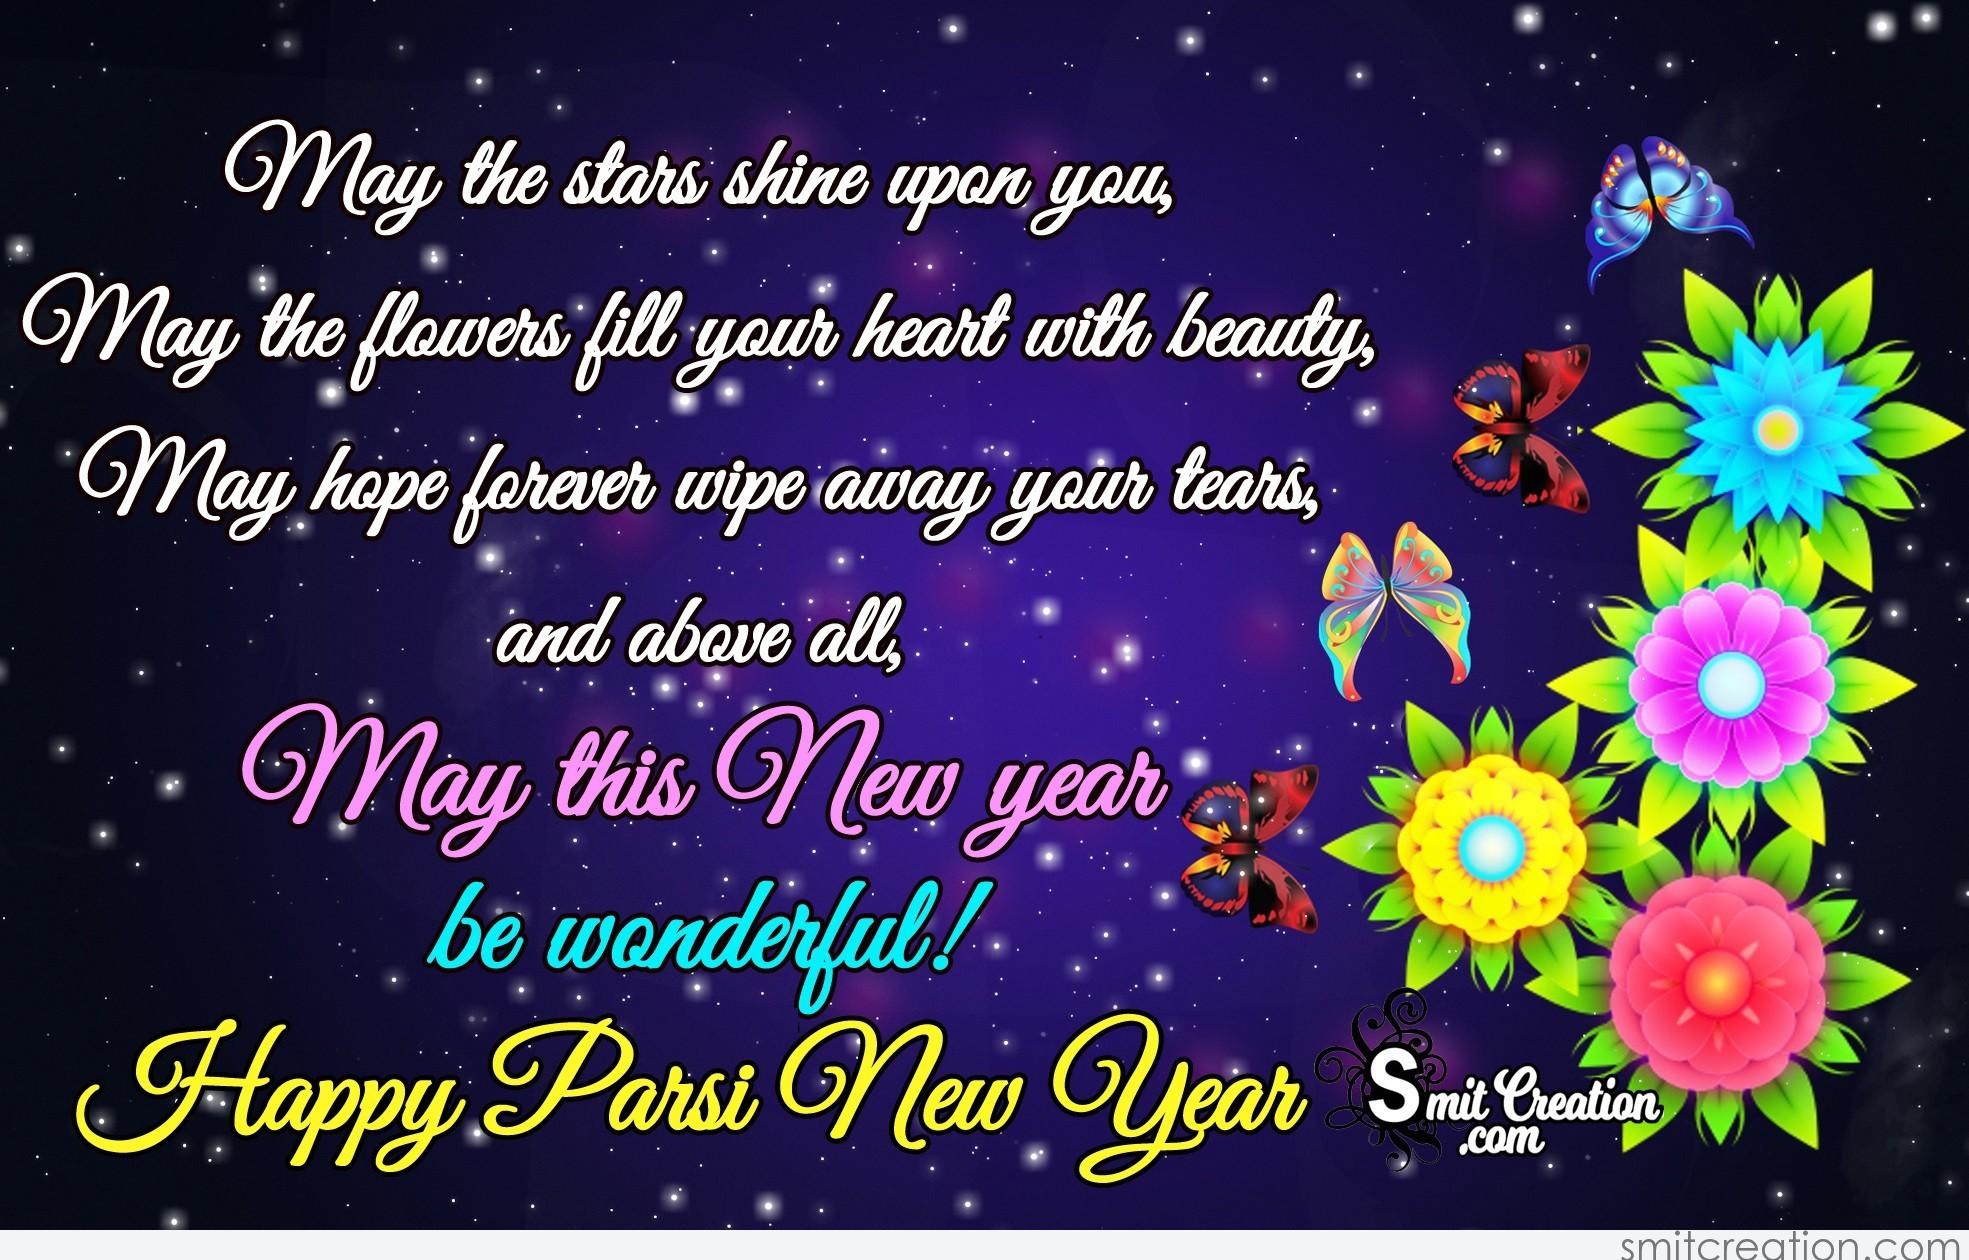 may this new year be wonderful happy parsi new year